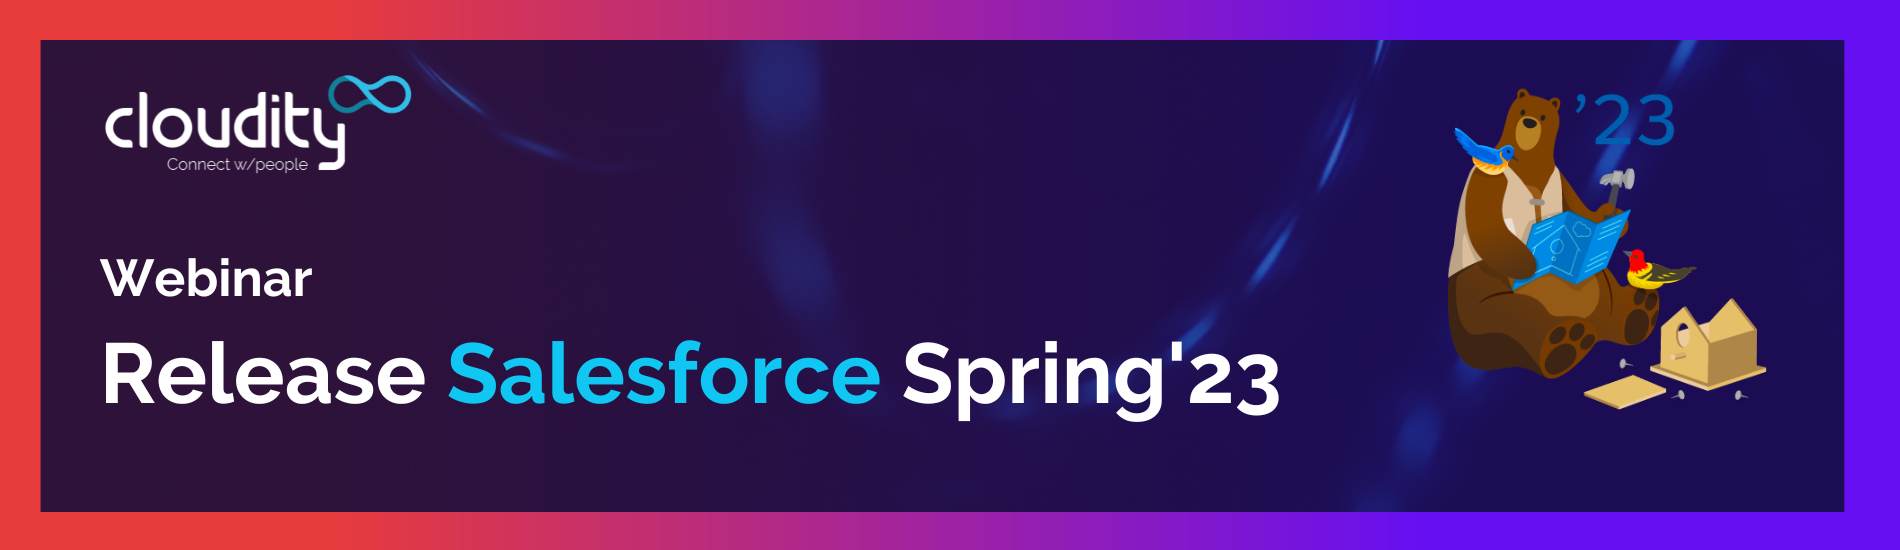 Webinar Salesforce Release Spring’23